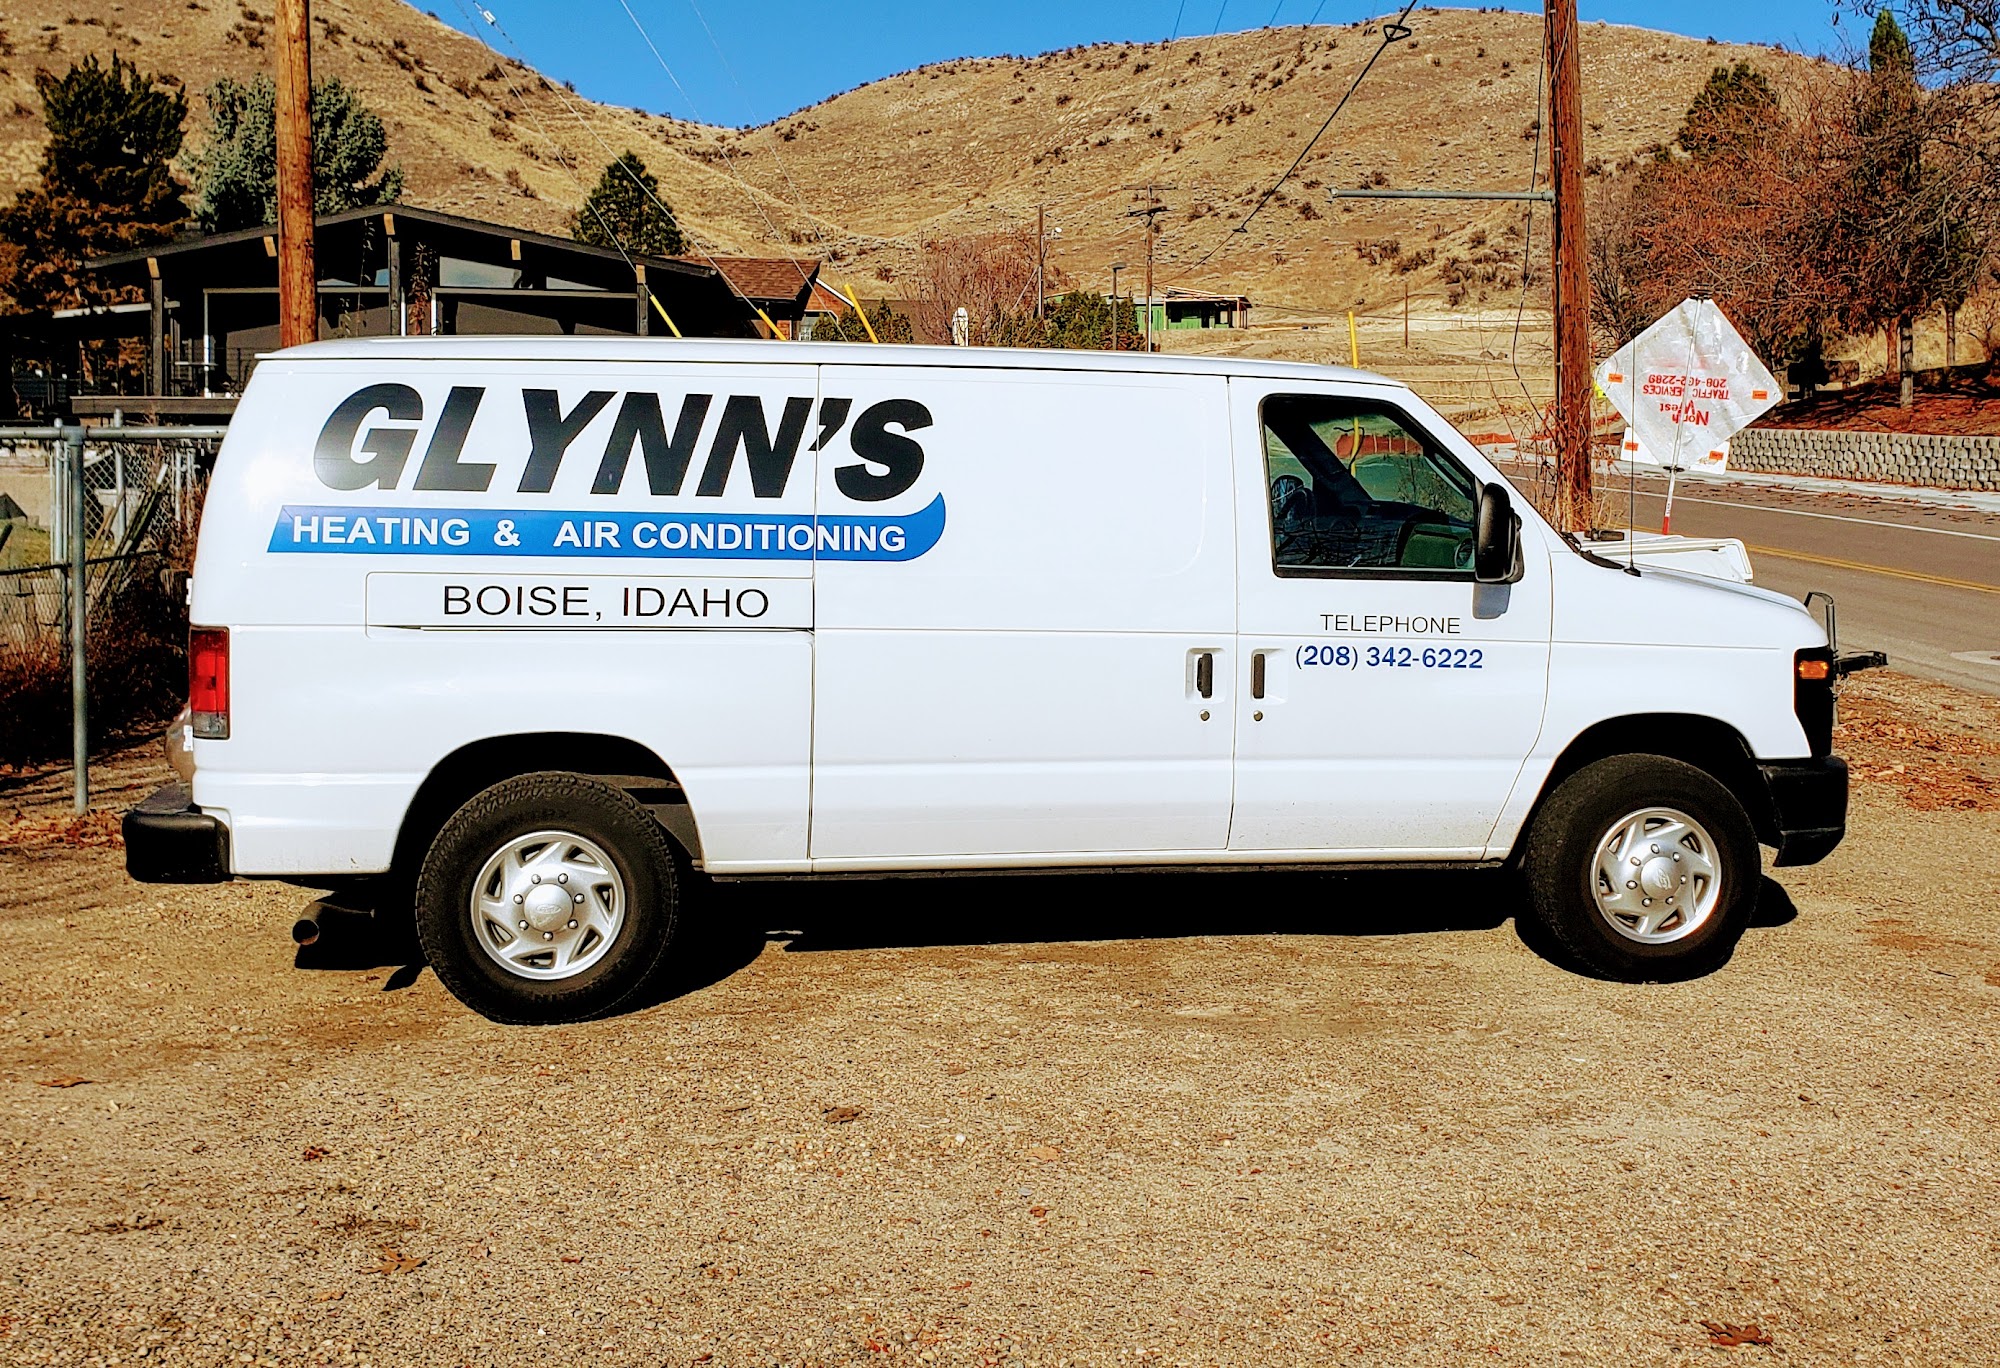 Glynn's Heating & Air Conditioning